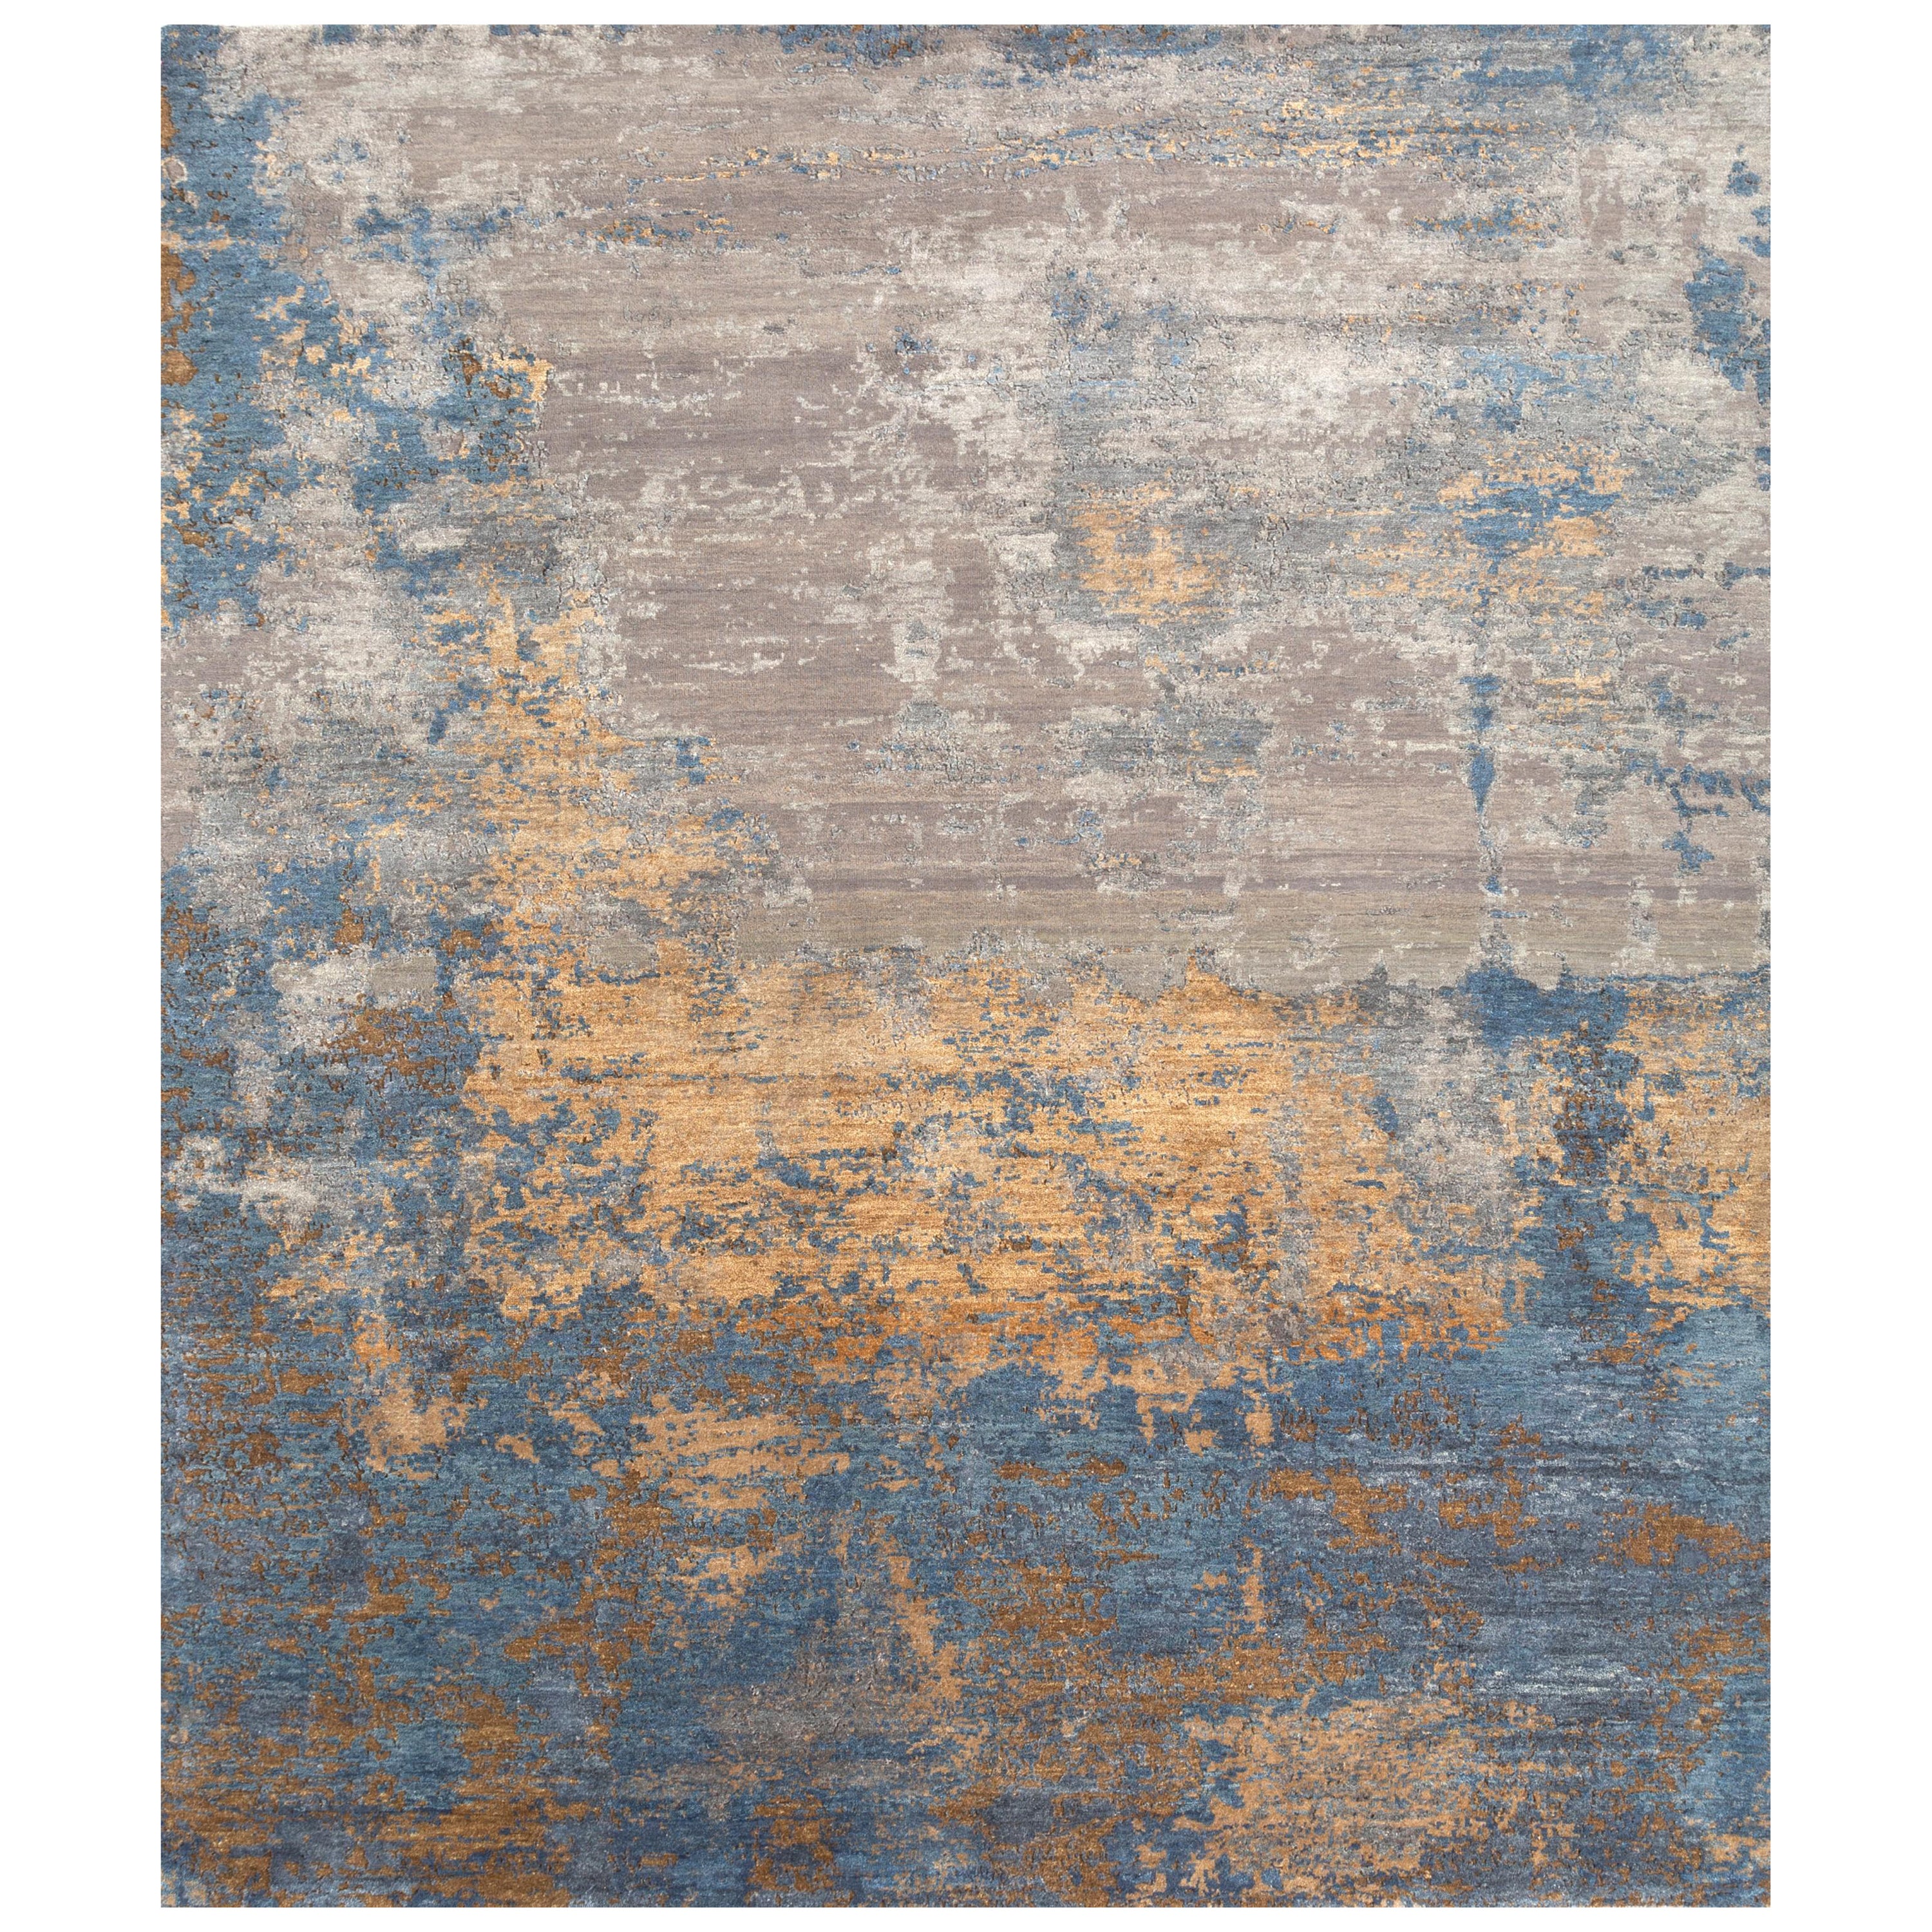 Tapis noué à la main, bleu nickel et jean, Harmony in Disarray 240x300 cm